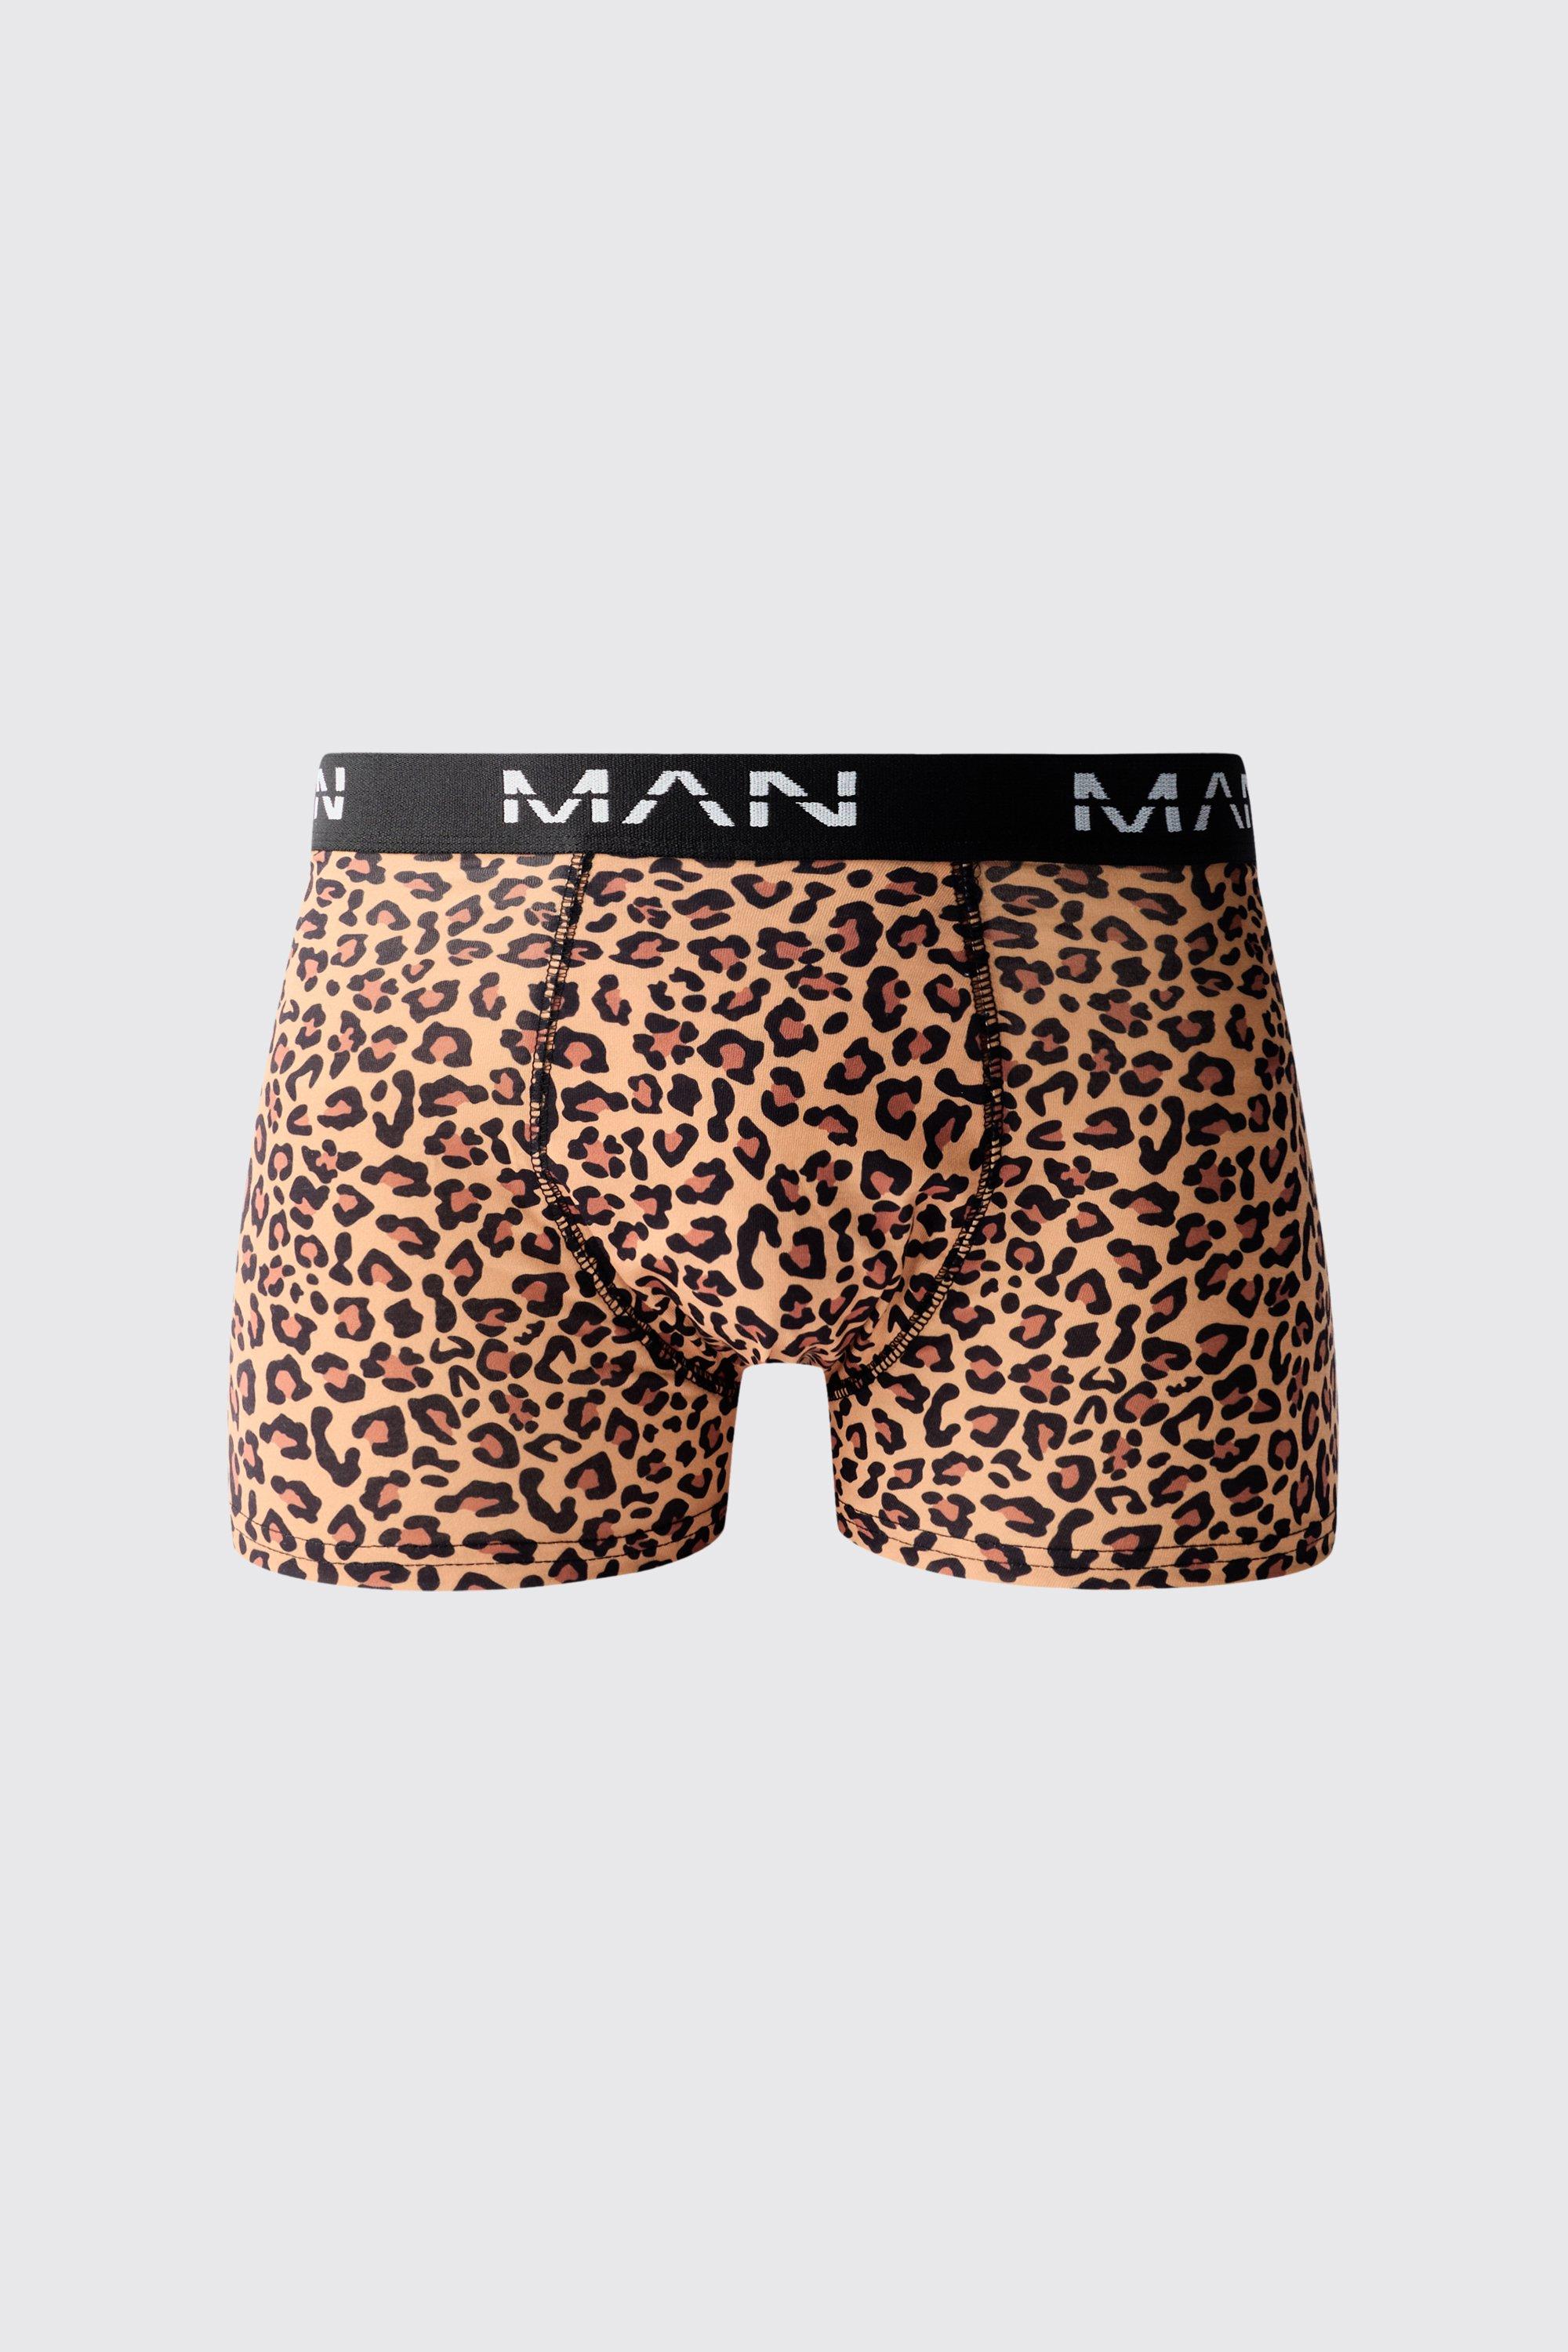 Mens Multi Man Leopard Printed Boxers, Multi